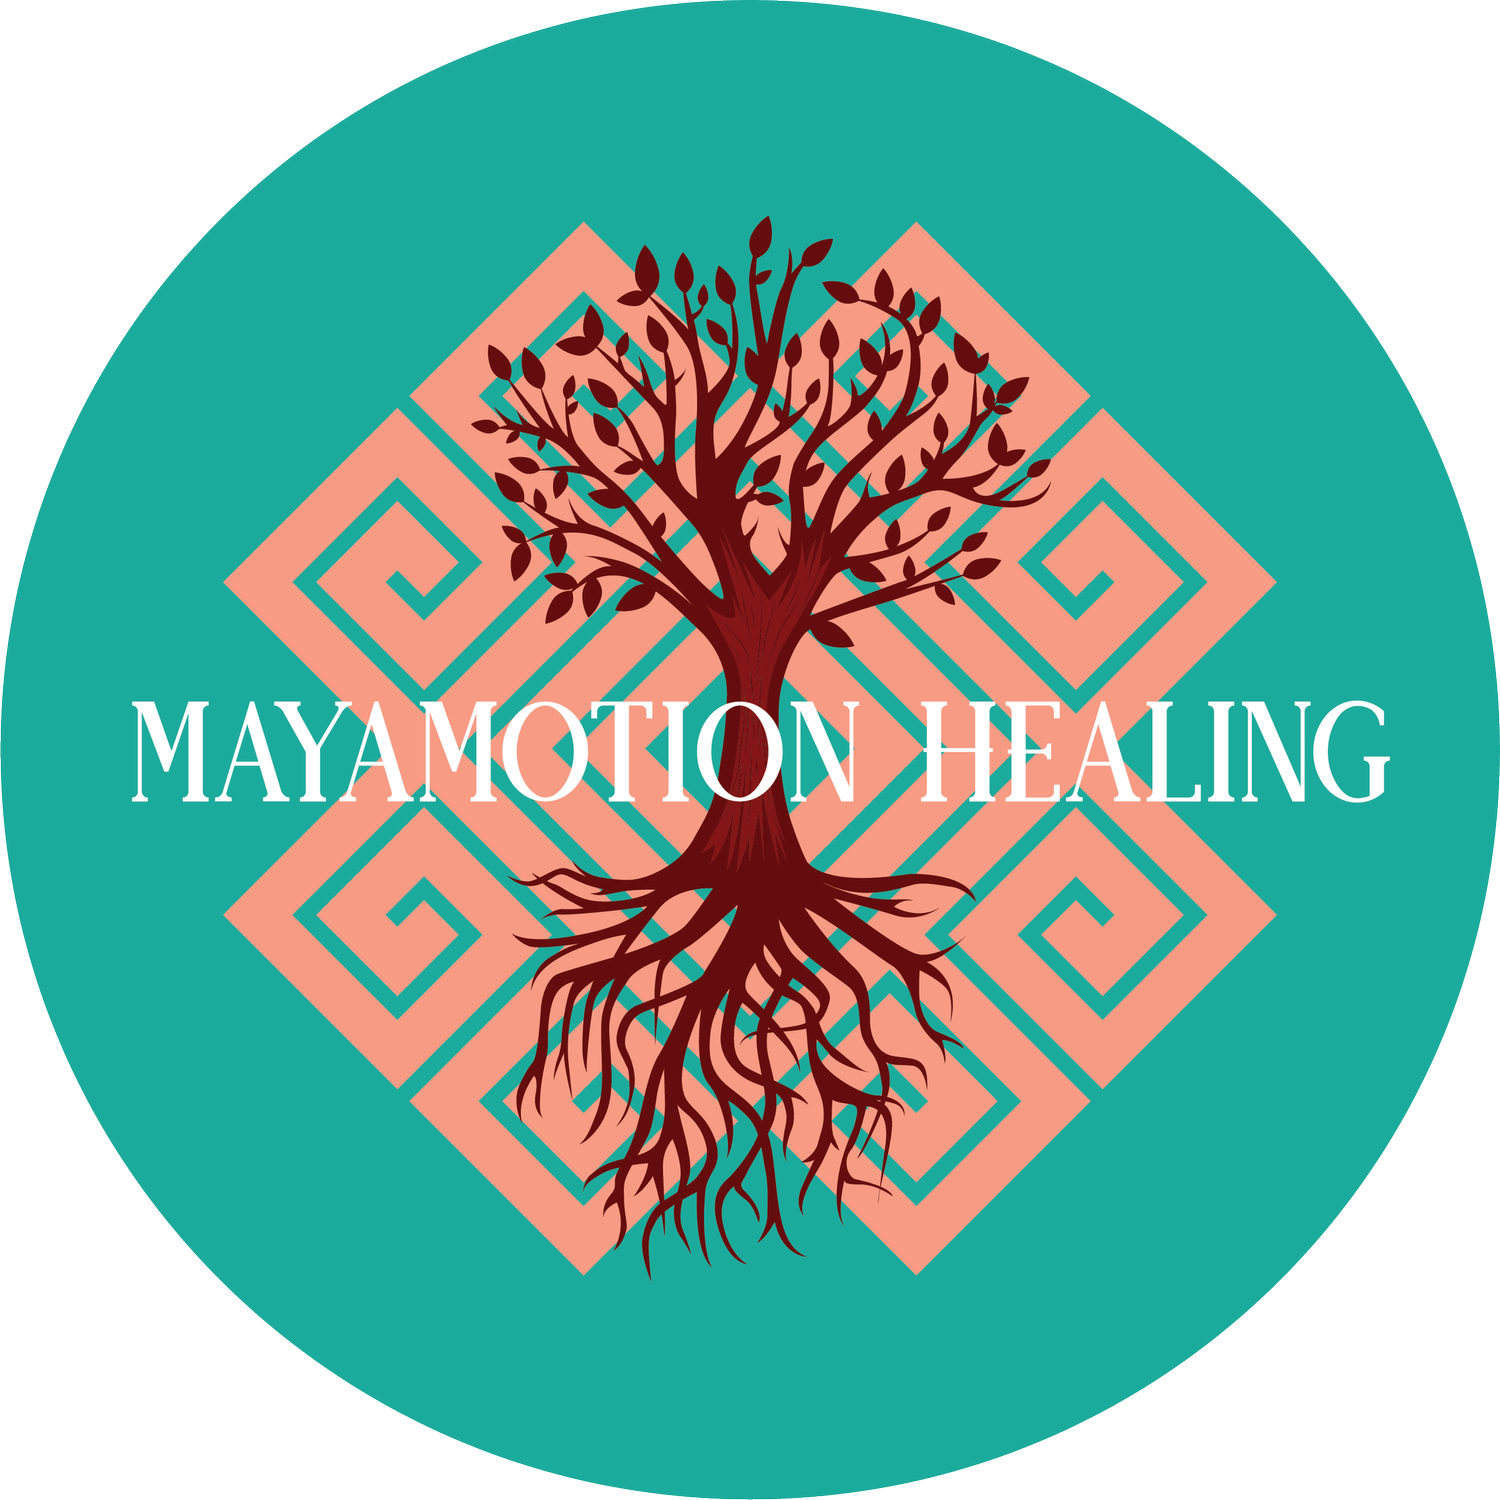 Mayamotion Healing